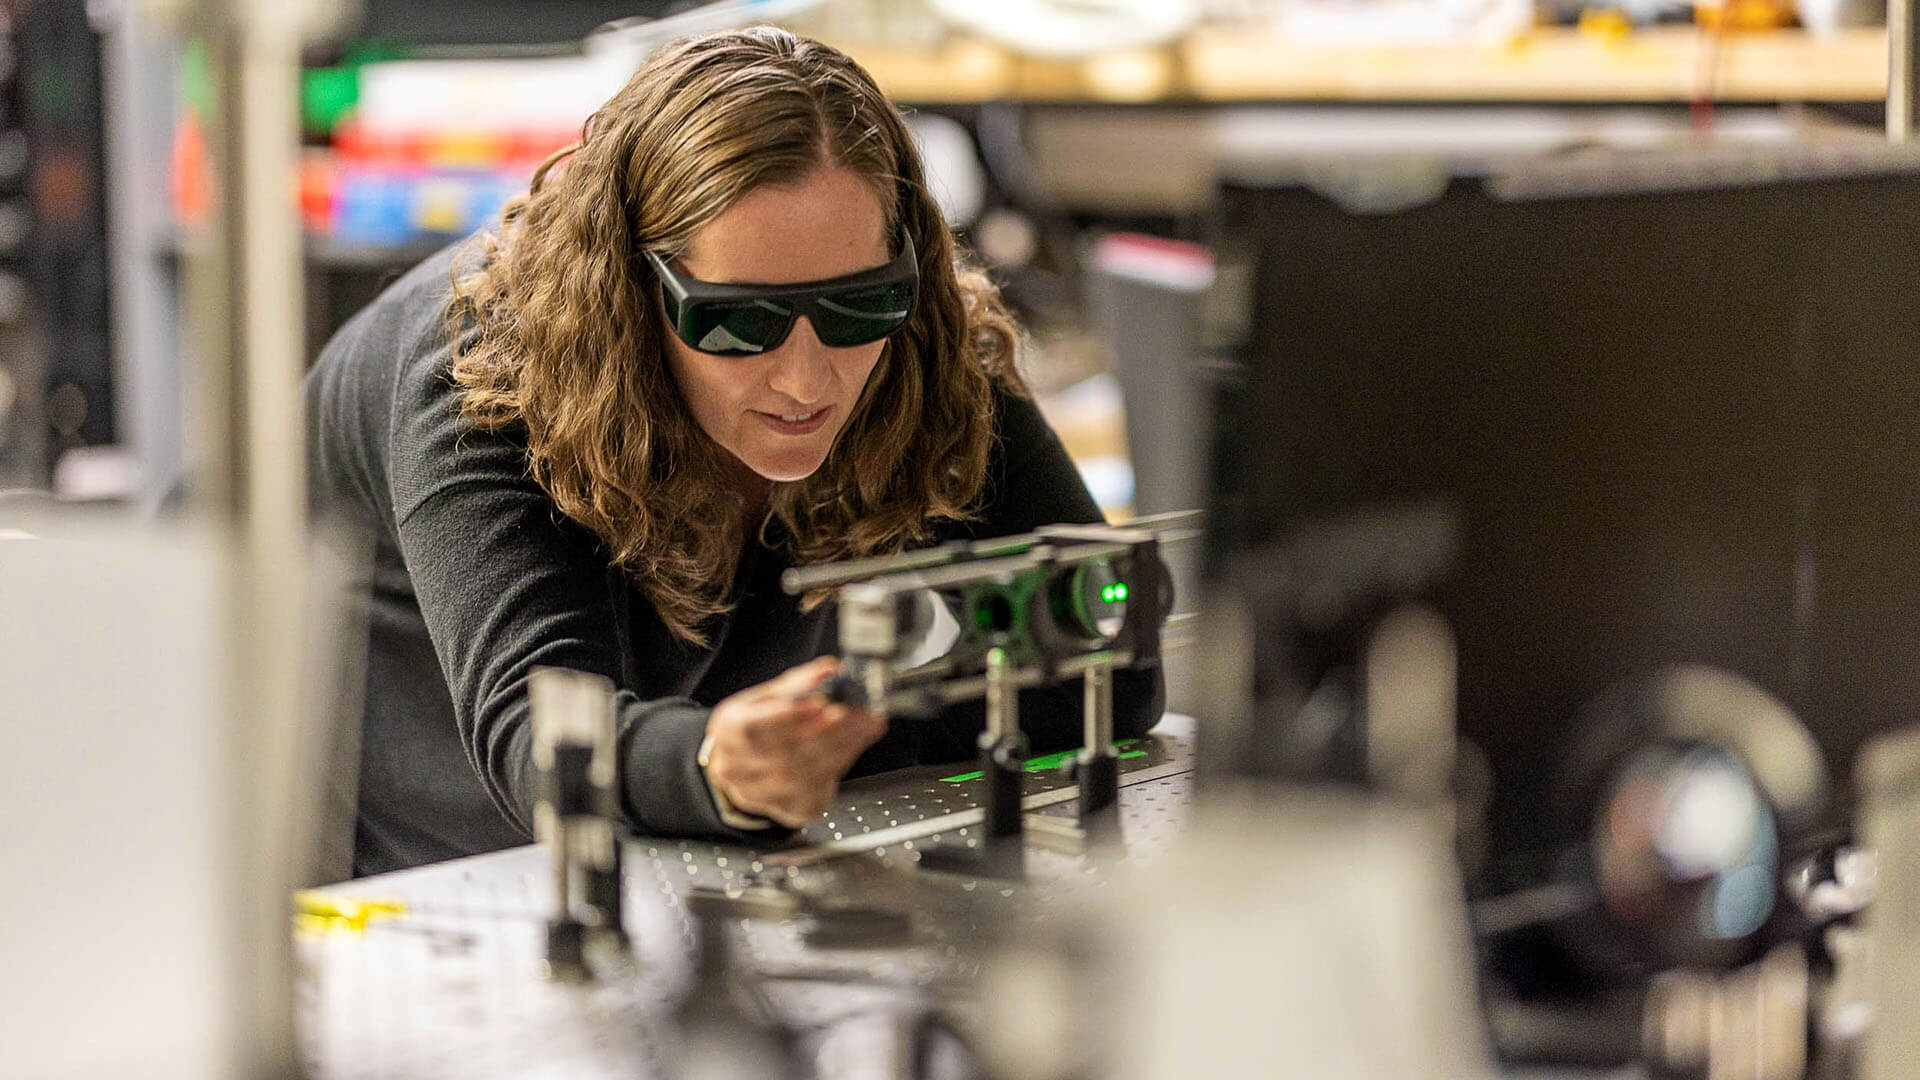 Laura wears dark glasses uses equipment in a computational imaging lab